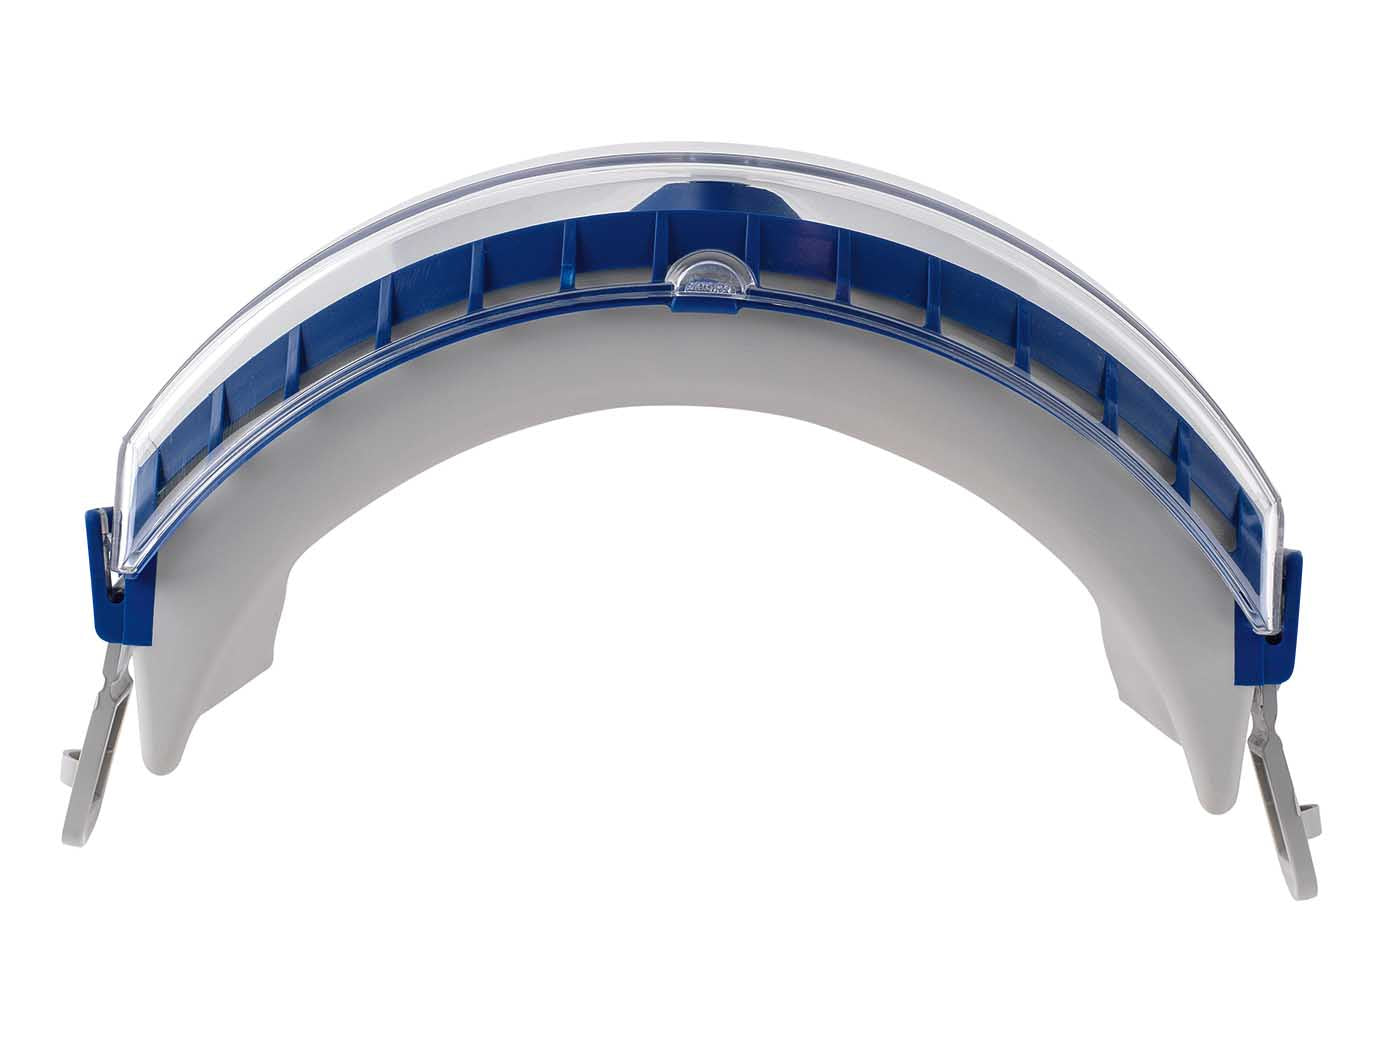 Honeywell 1011071HS Maxx Pro Safety Goggles with Hydroshield Coating and Neoprene Headband